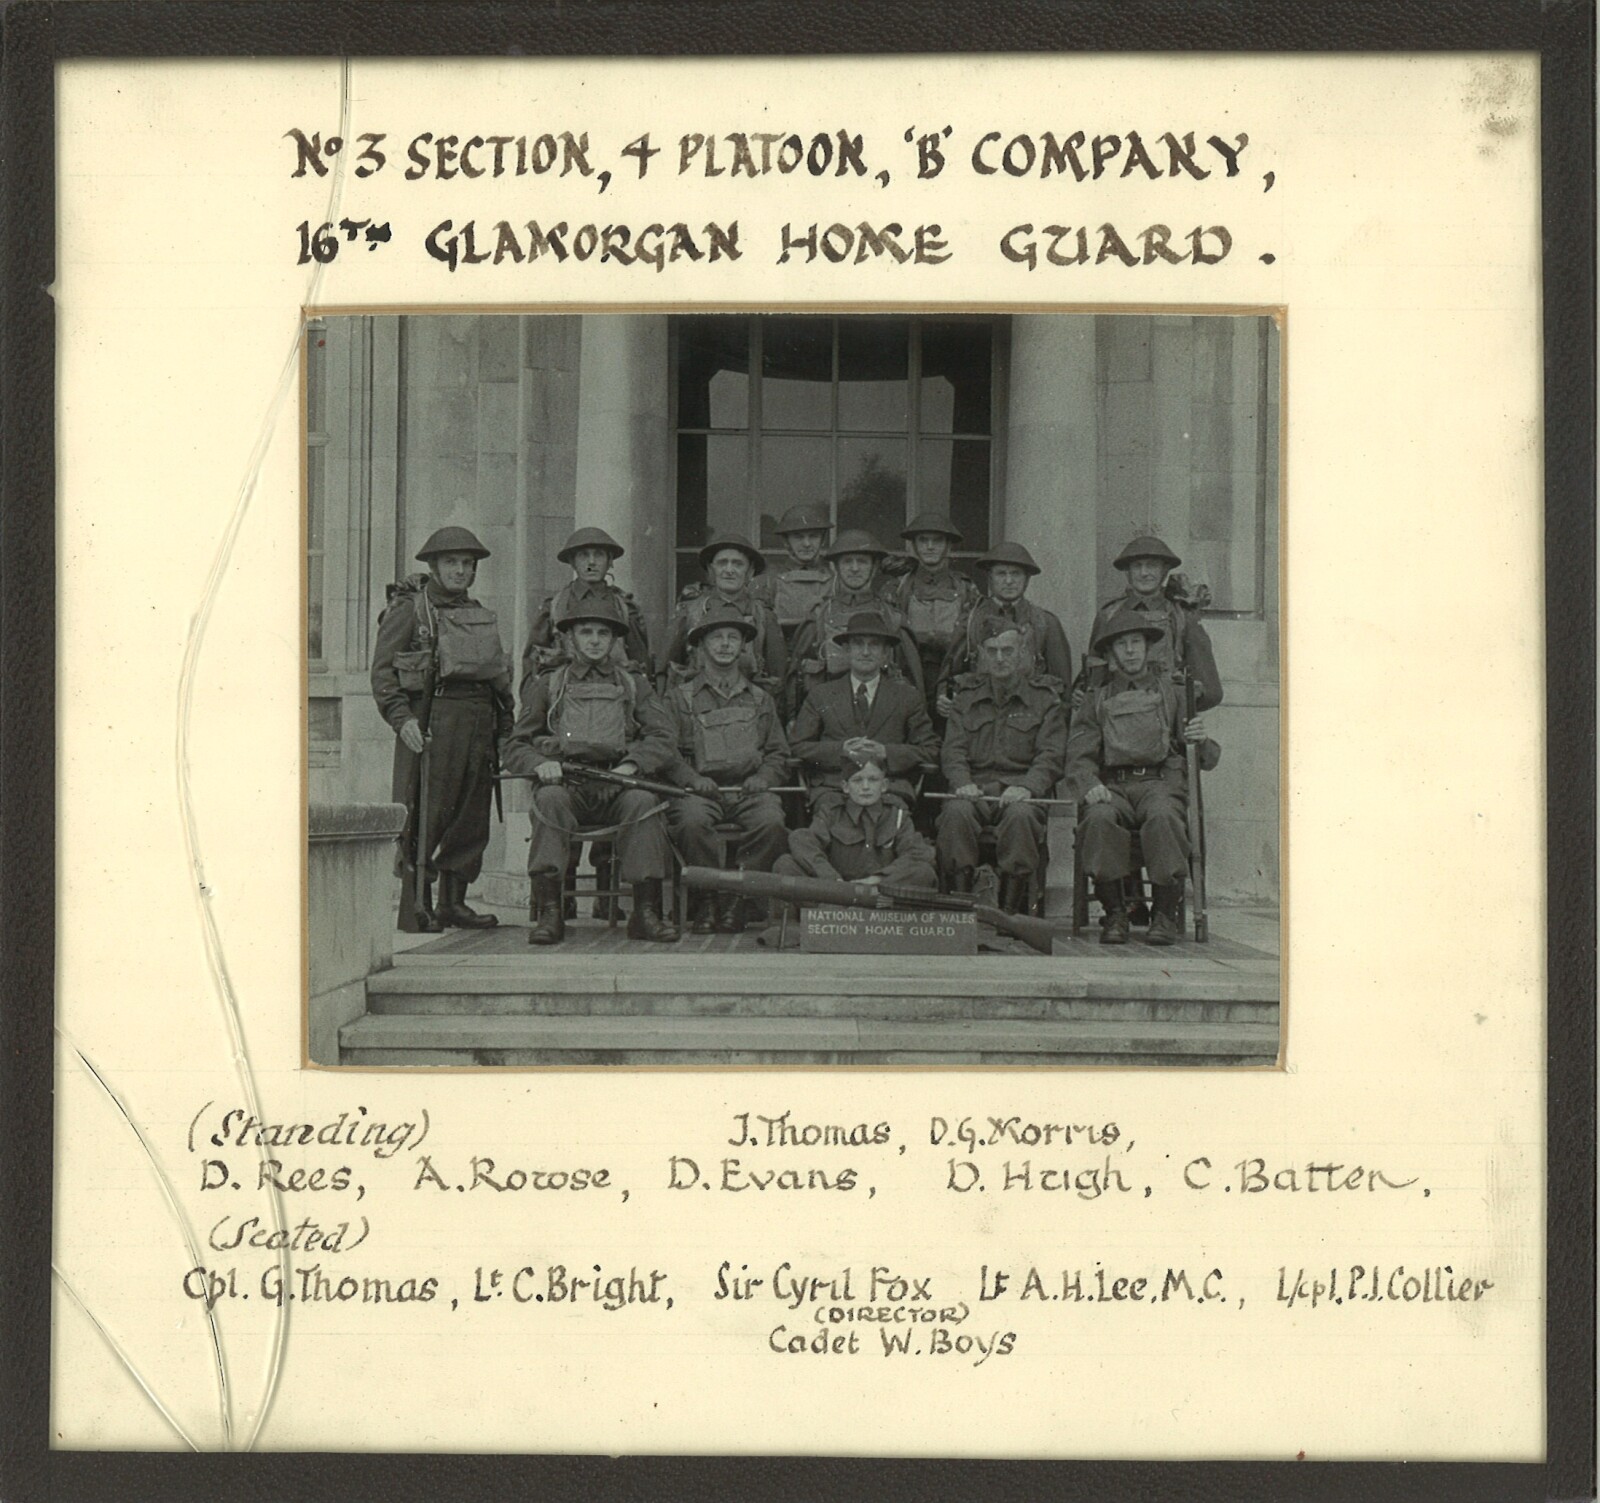 16th Glamorgan Home Guard 'National Museum Wales section' [circa. 1940]